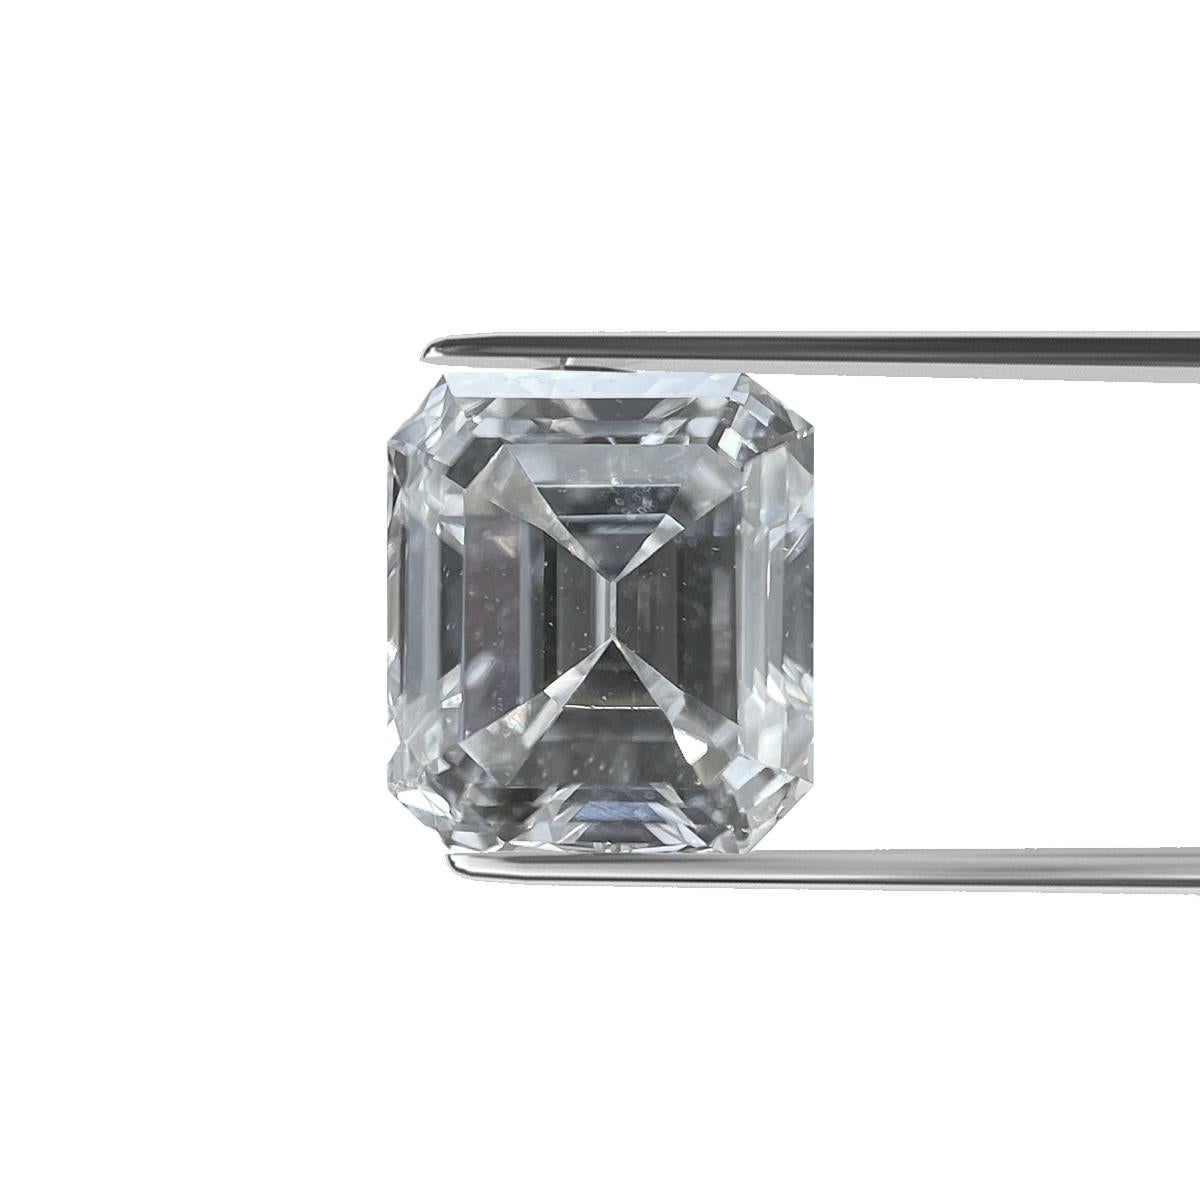 ITEM DESCRIPTION

ID #: NY56719
Stone Shape:	EMERALD CUT
Diamond Weight: 0.97ct
Clarity: VS1
Color: G
Cut:	Excellent
Measurements: 5.83 x 5.23 x 3.54 mm
Depth %:	67.7%
Table %:	70%
Symmetry: Good
Polish: Good
Fluorescence: None
Certifying Lab: